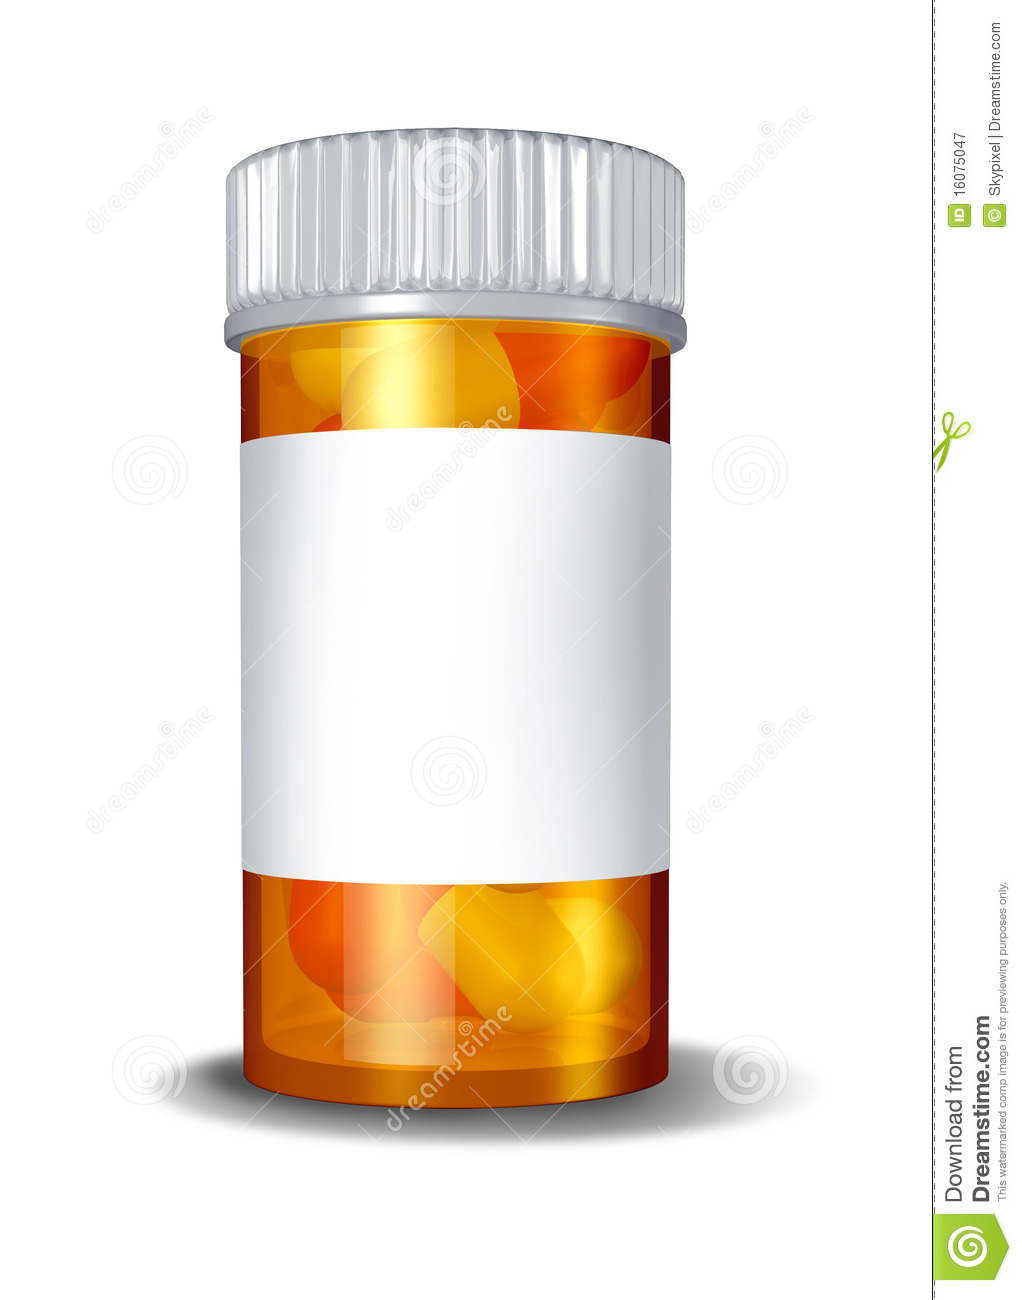 Pill Bottle Prescription Drugs Royalty Free Stock Photography   Image